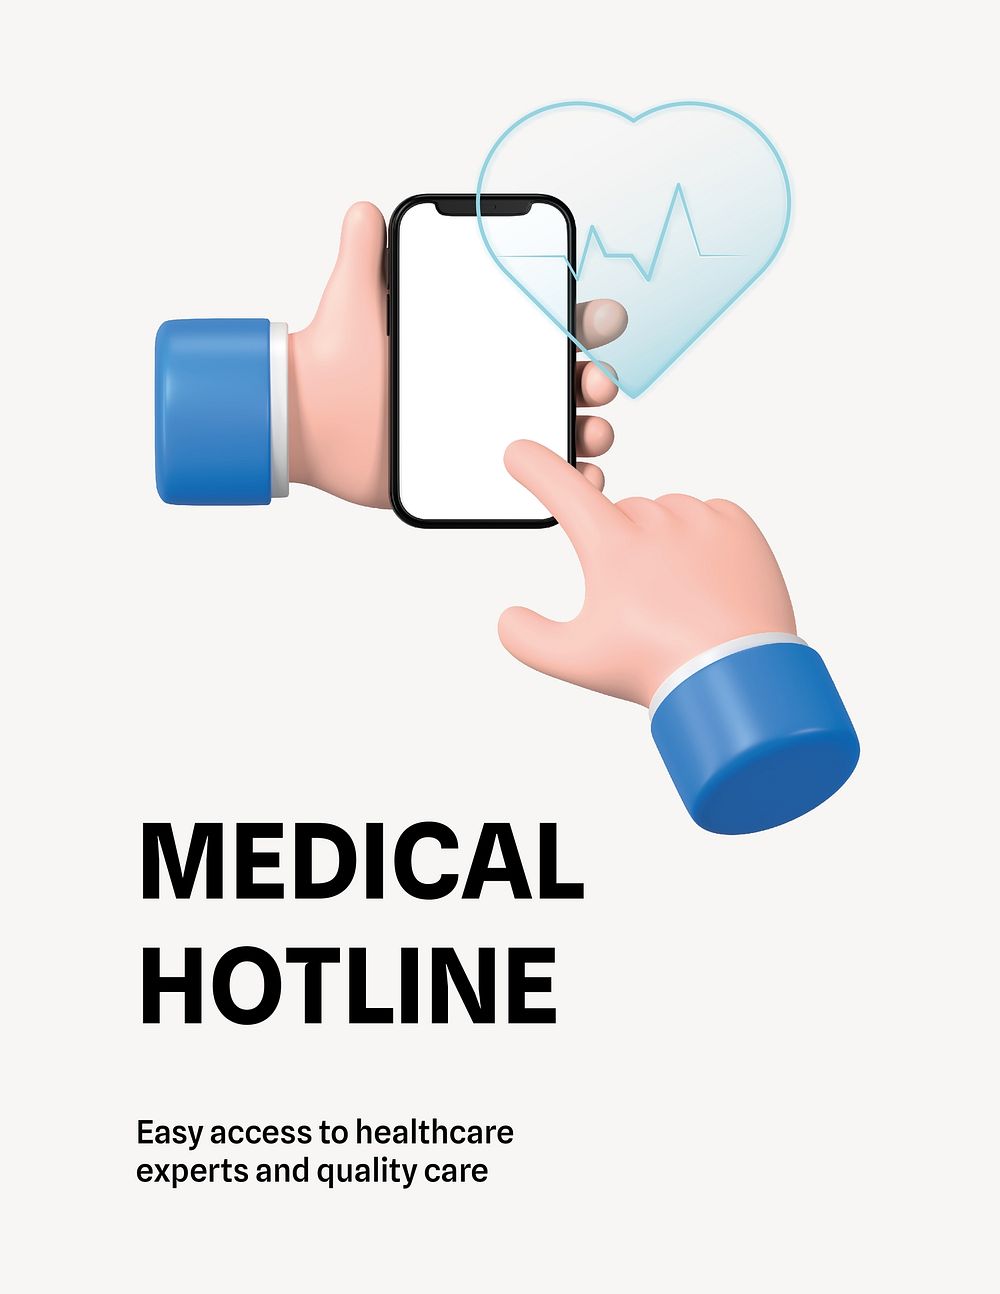 Medical hotline flyer template, editable text vector